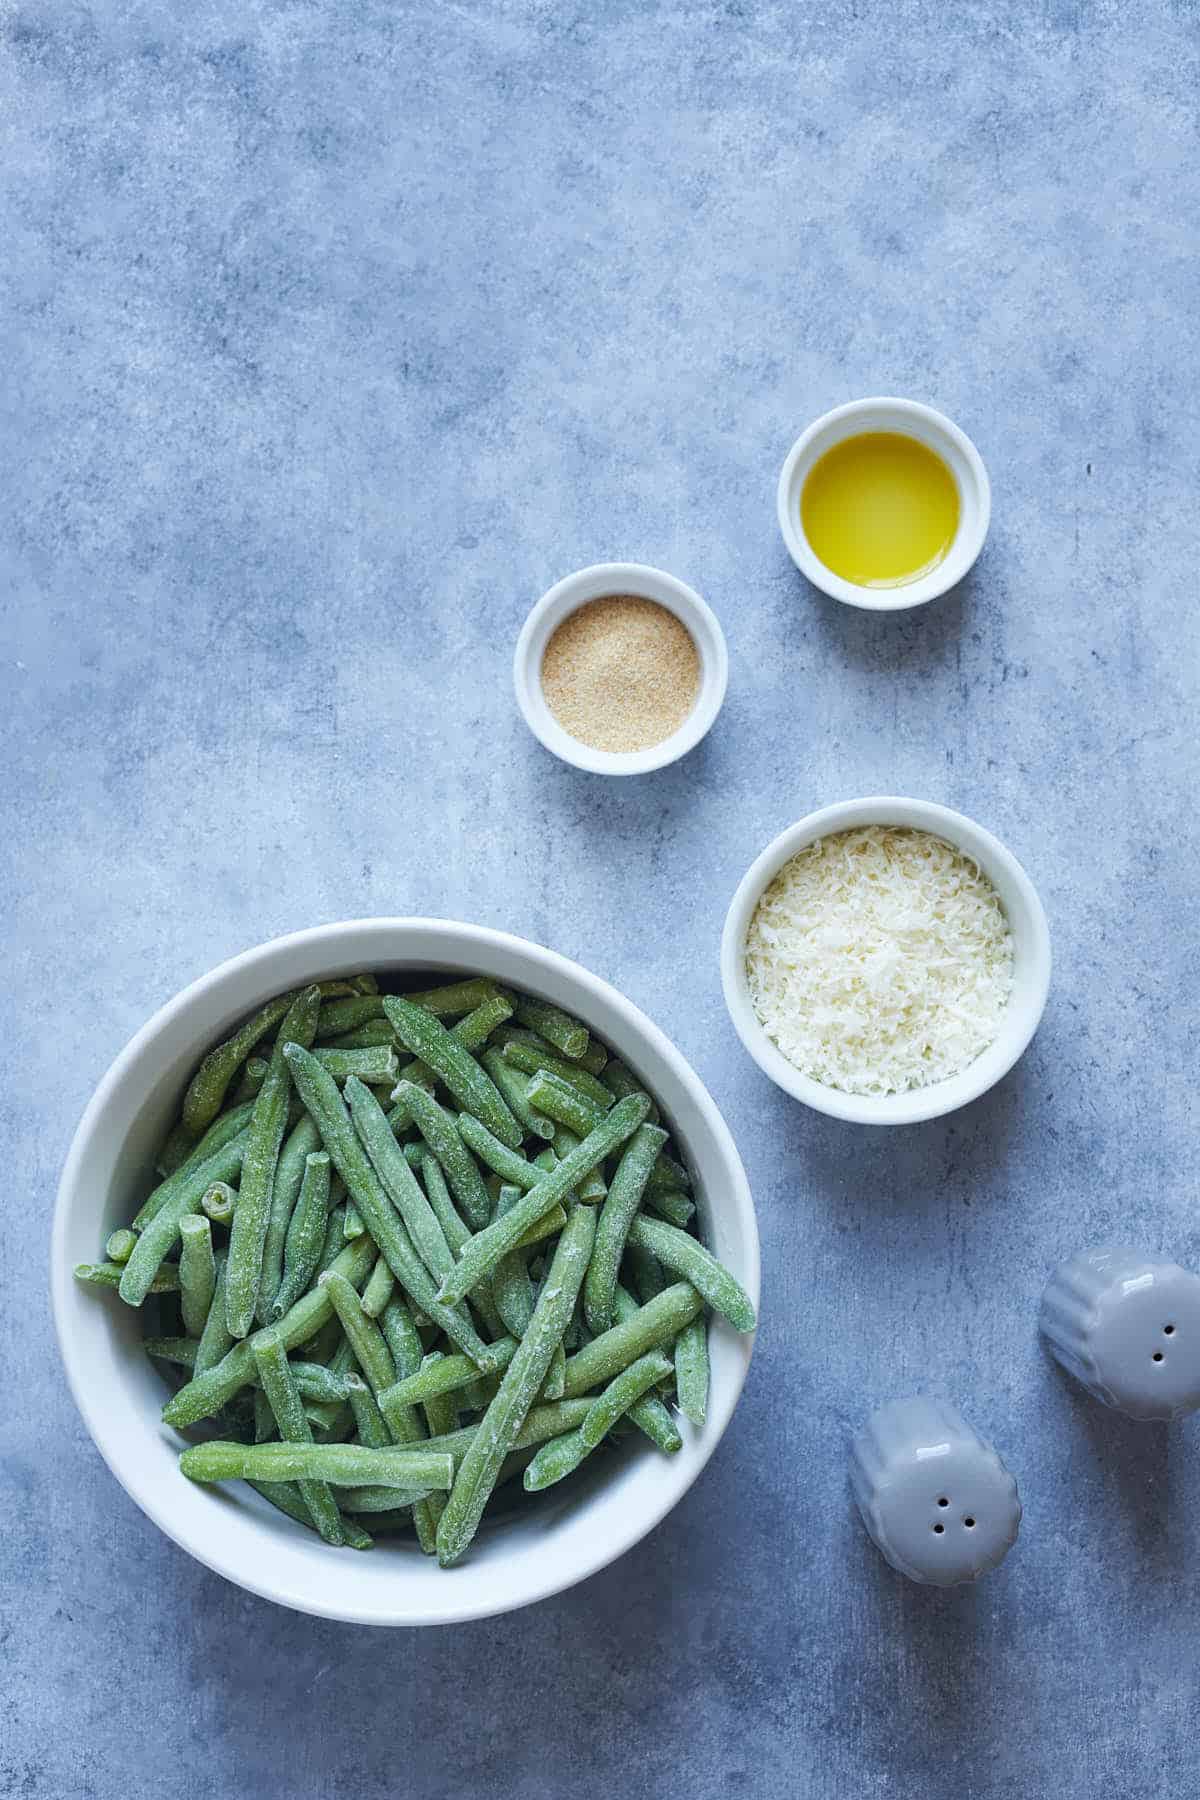 Ingredients to make air fryer frozen green beans.